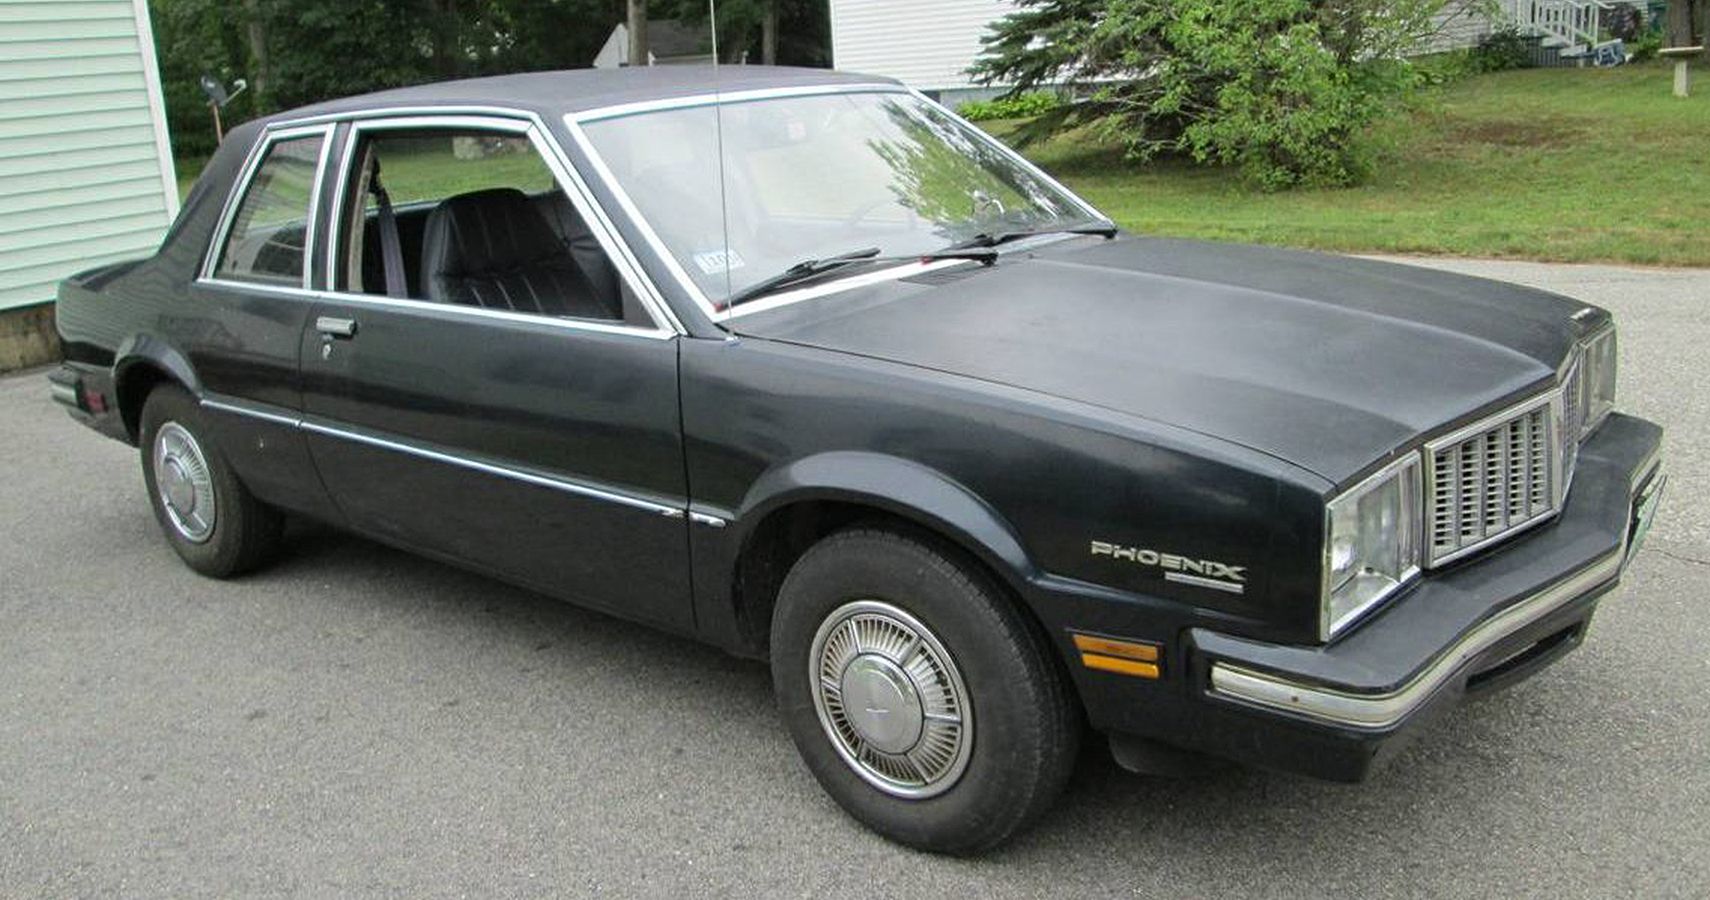 1980-1984 Pontiac Phoenix: The Infamous X-Body